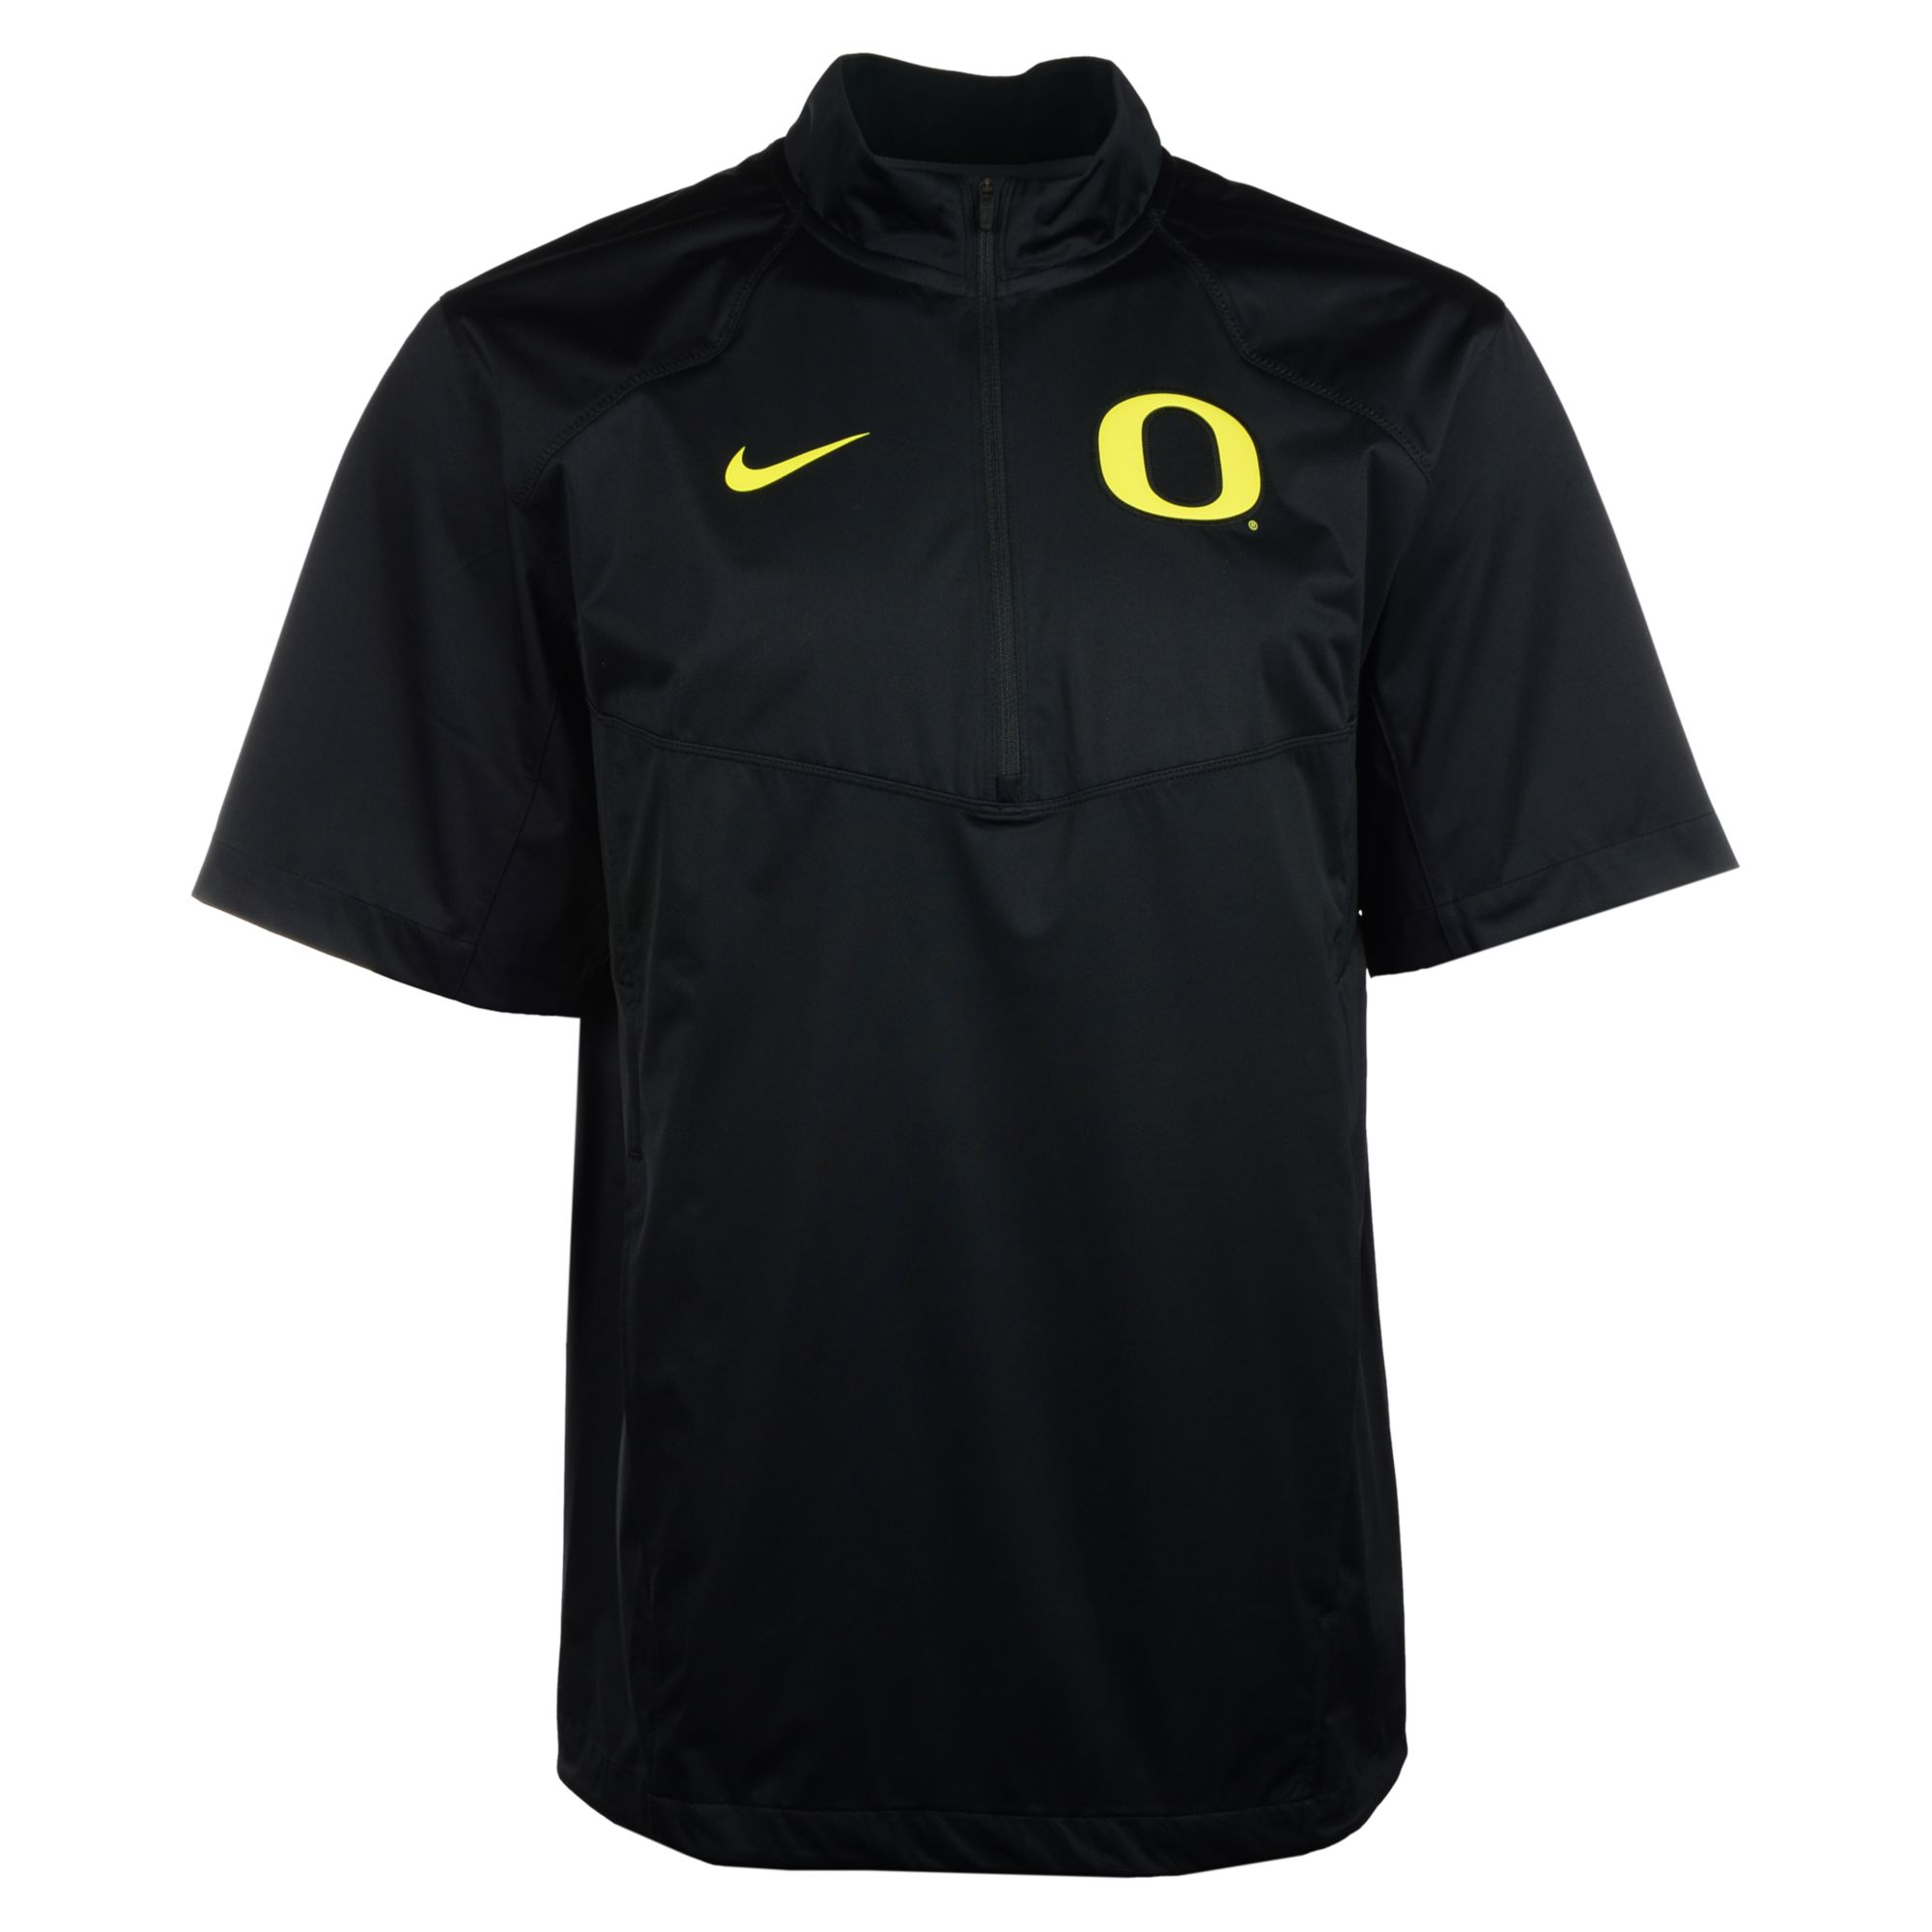 Nike Short Sleeve Oregon Ducks Half Zip Jacket in Black for Men - Lyst